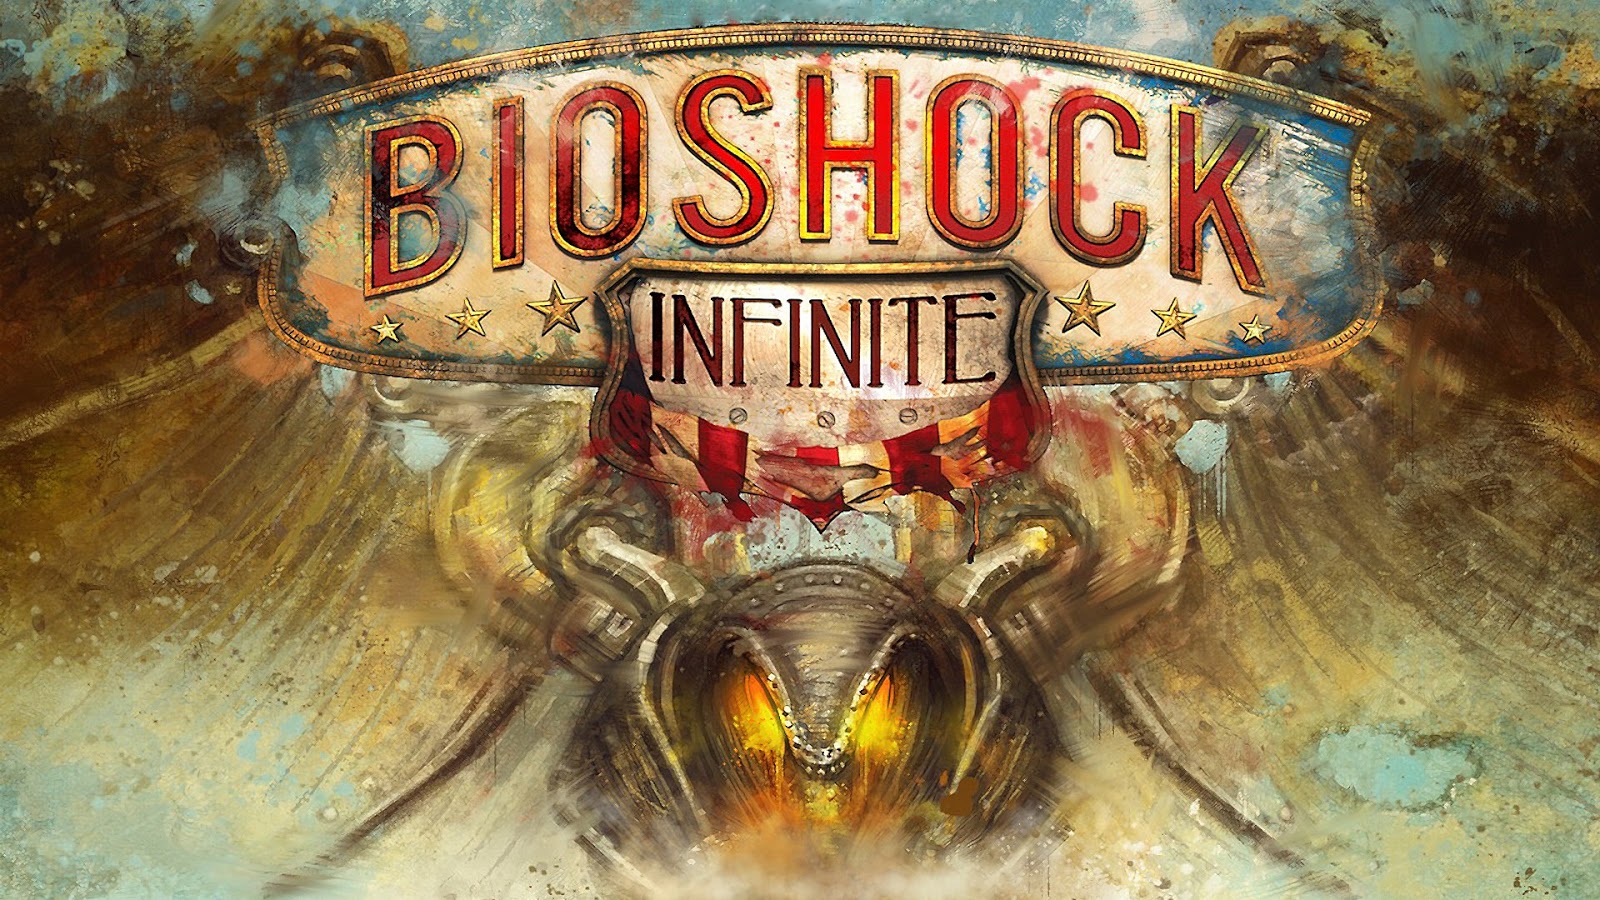 Shane S Kb For Gamers Bioshock Infinite